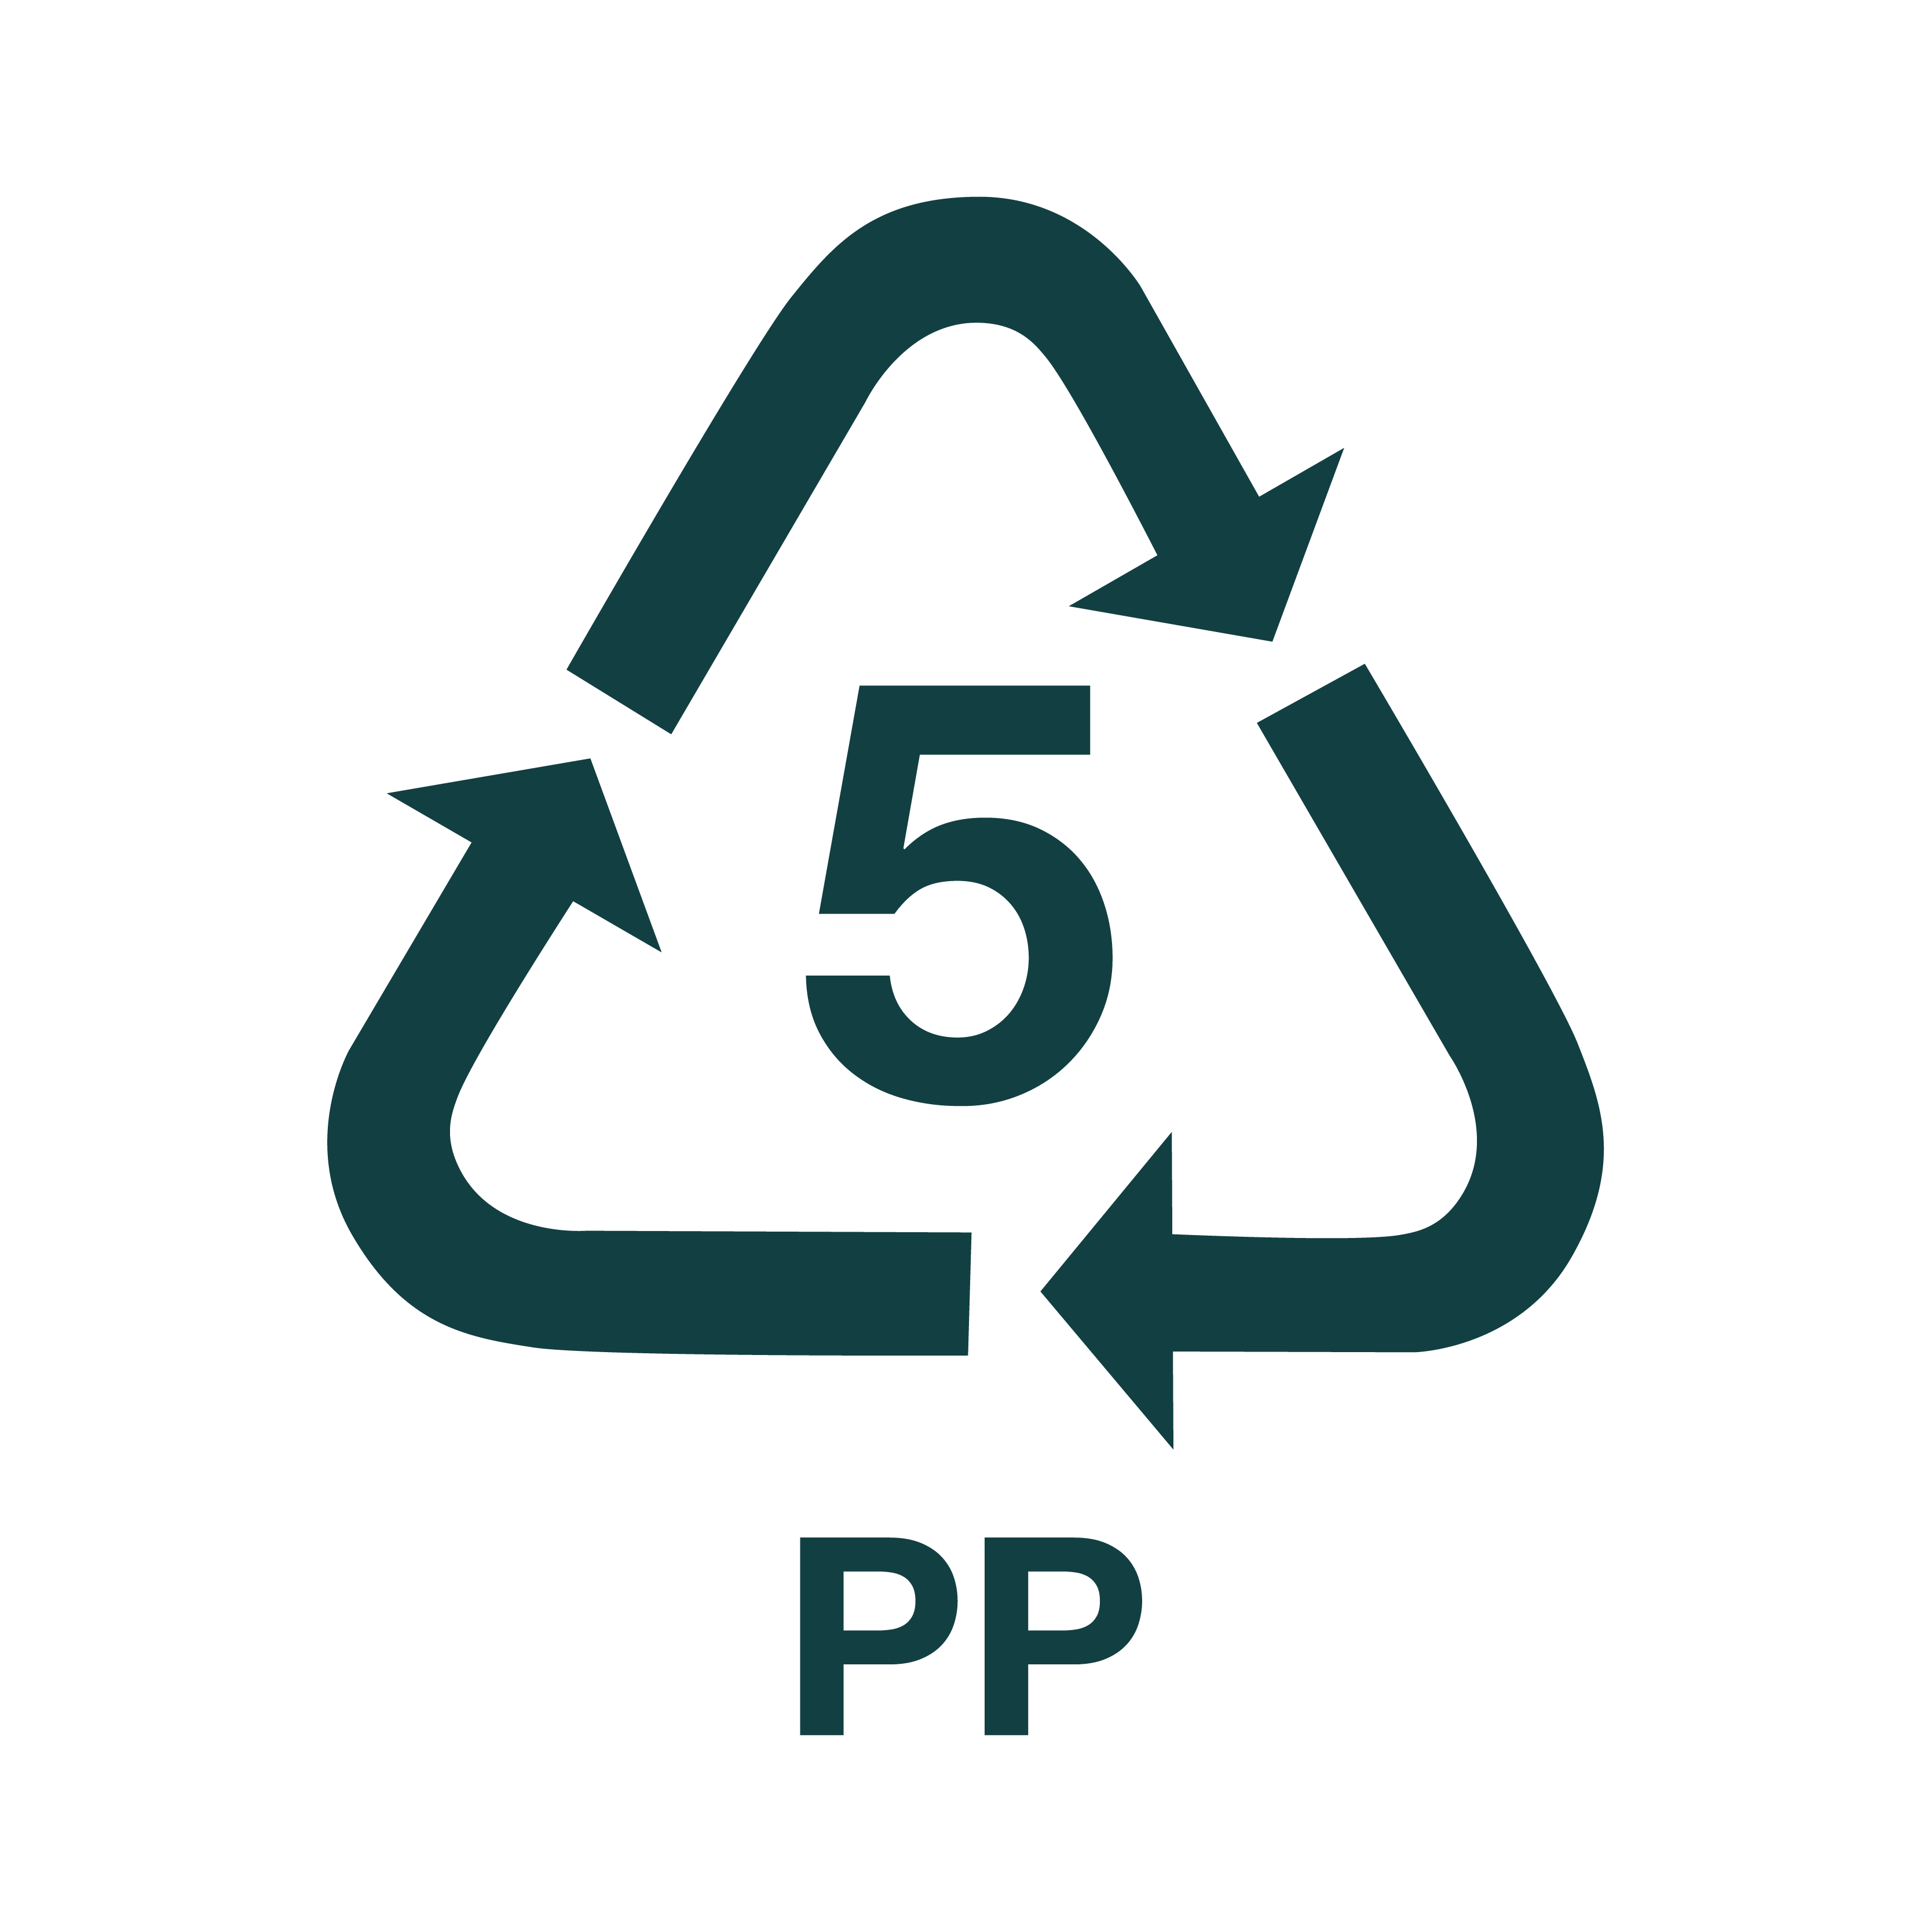 Plastic 5_PP_Green-01